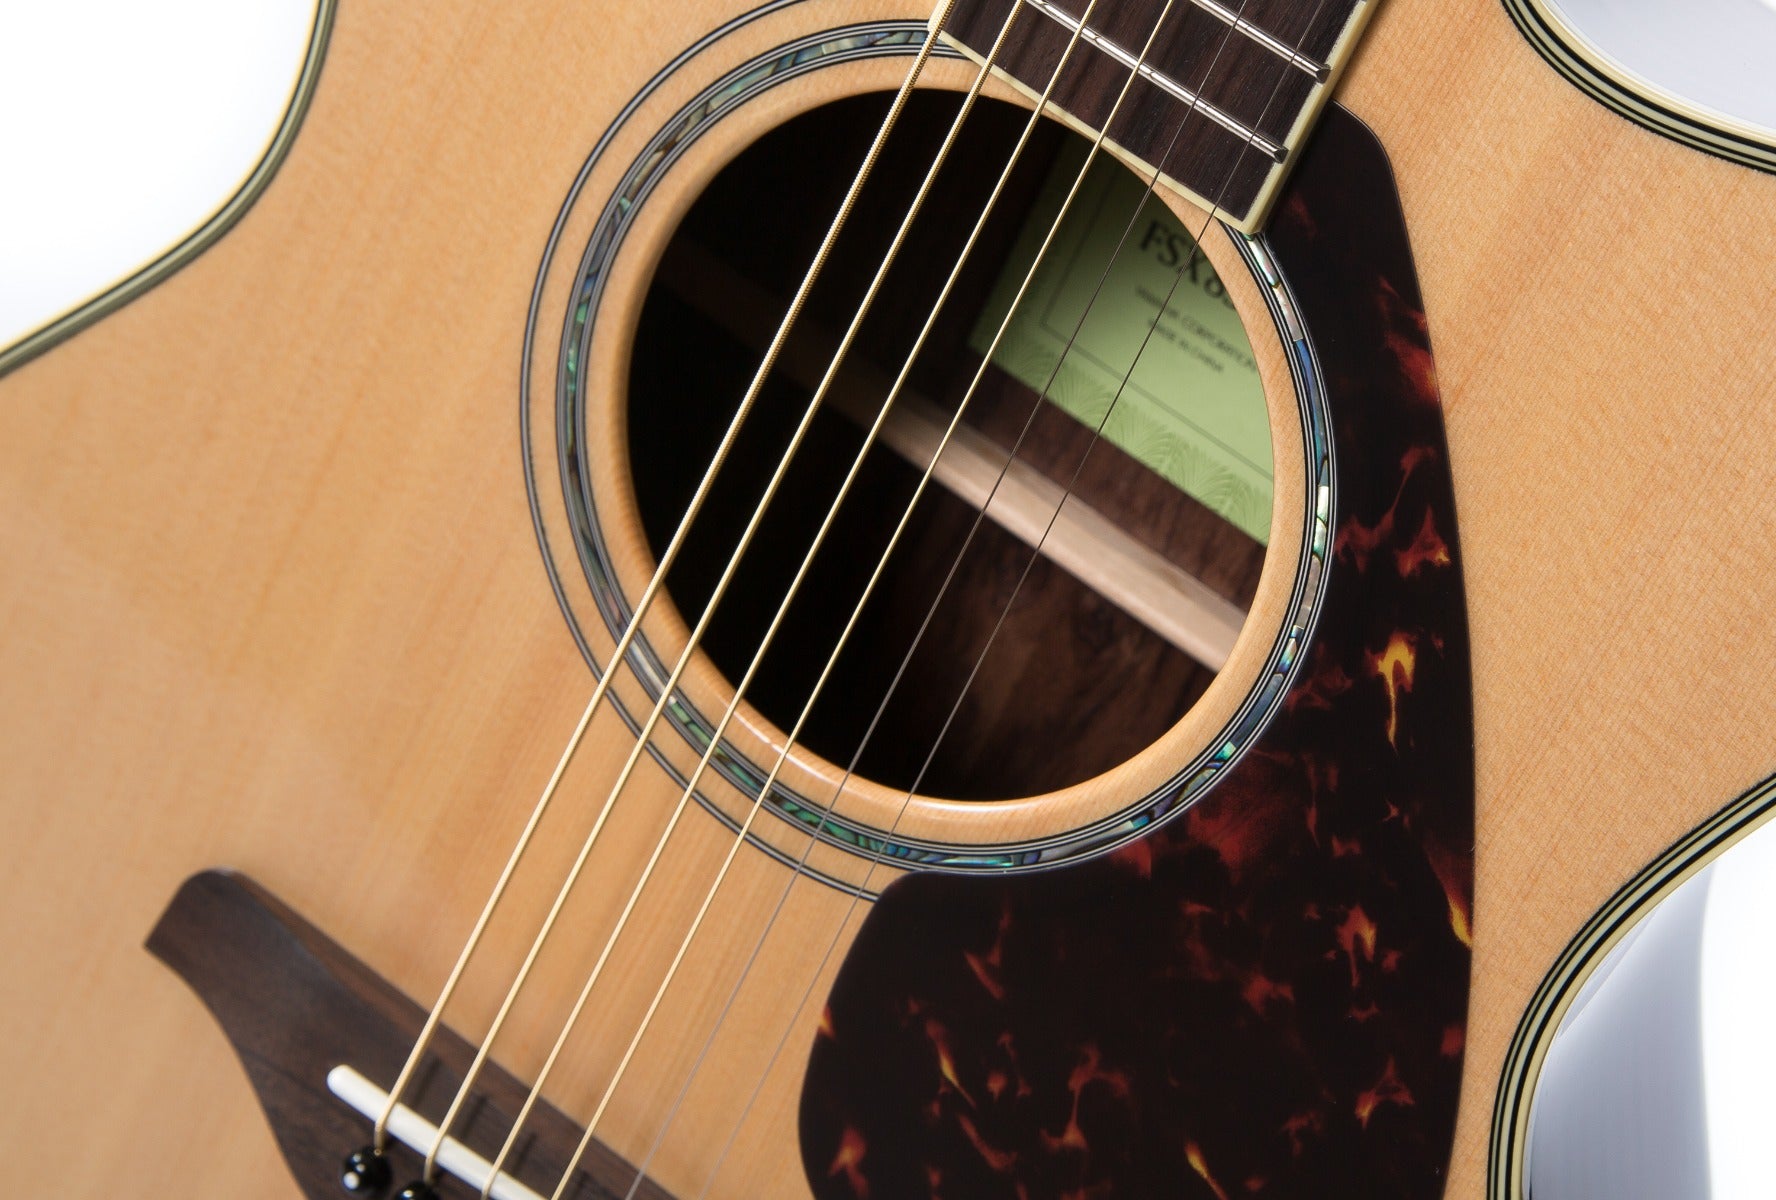 Yamaha FSX830C Acoustic-Electric Guitar - Natural